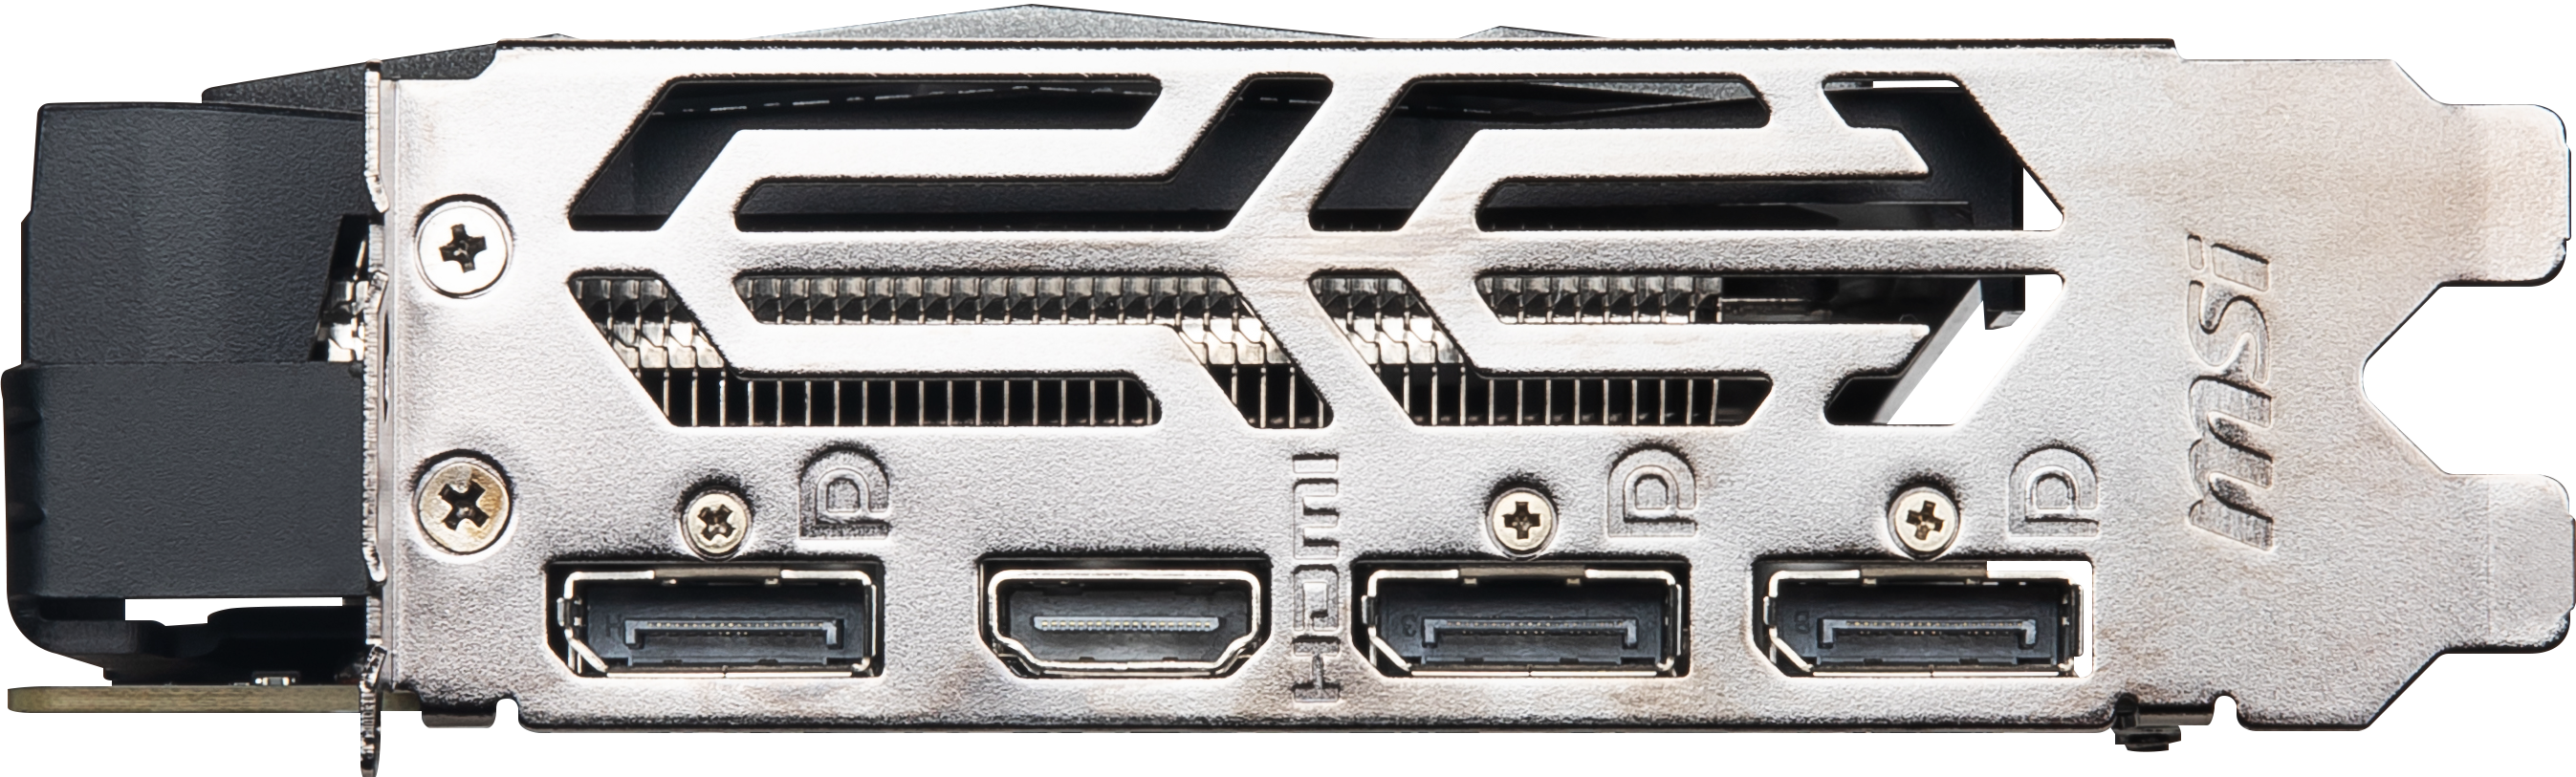 1650 4GB GeForce® SUPER™ Gaming GTX MSI X (V385-003R) (NVIDIA, Grafikkarte)